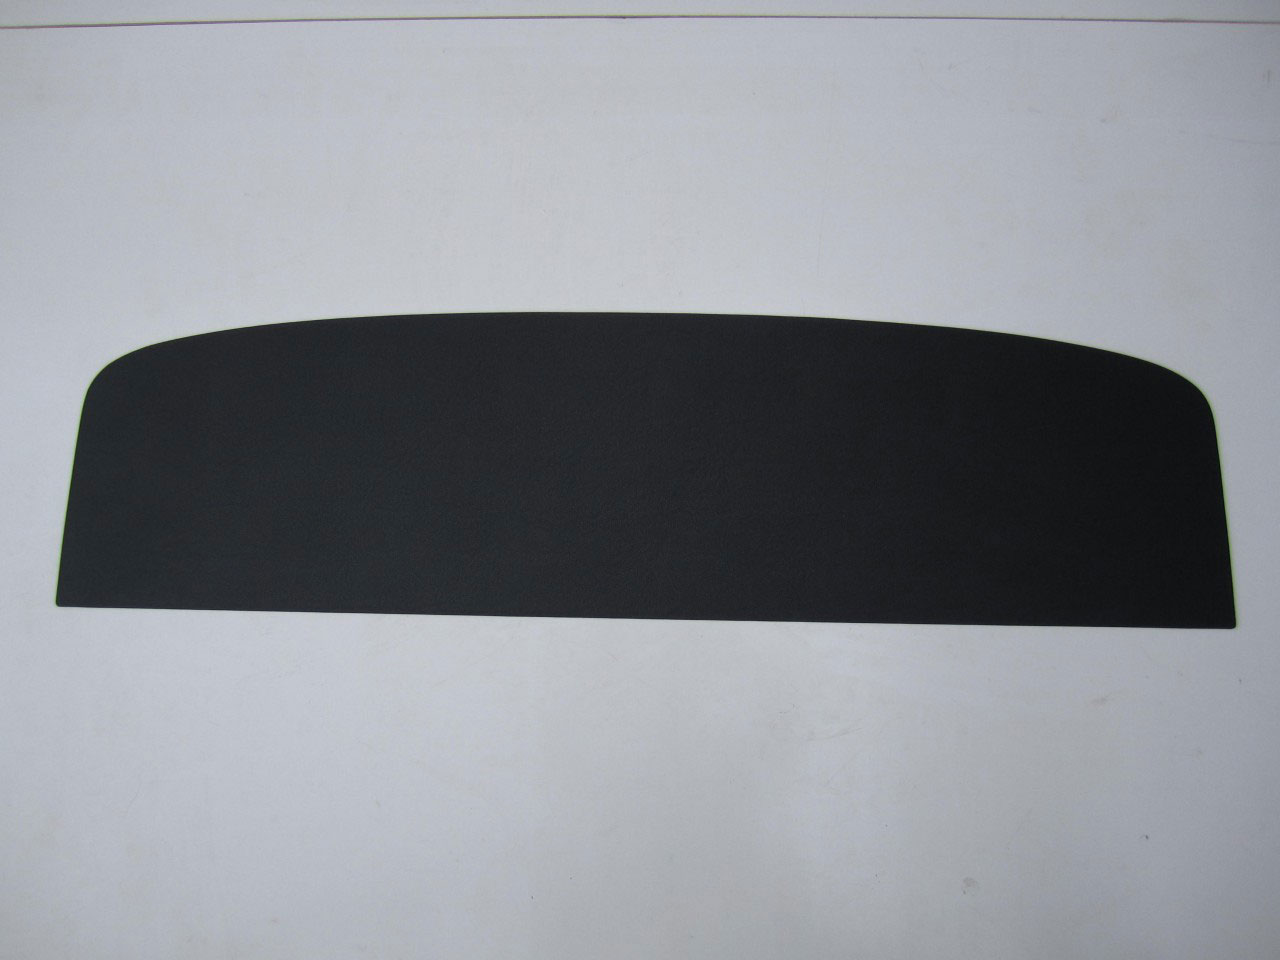 Holden Monaro HK Monaro GTS Coupe 10X Black Parcel Shelf (Image 1 of 1)